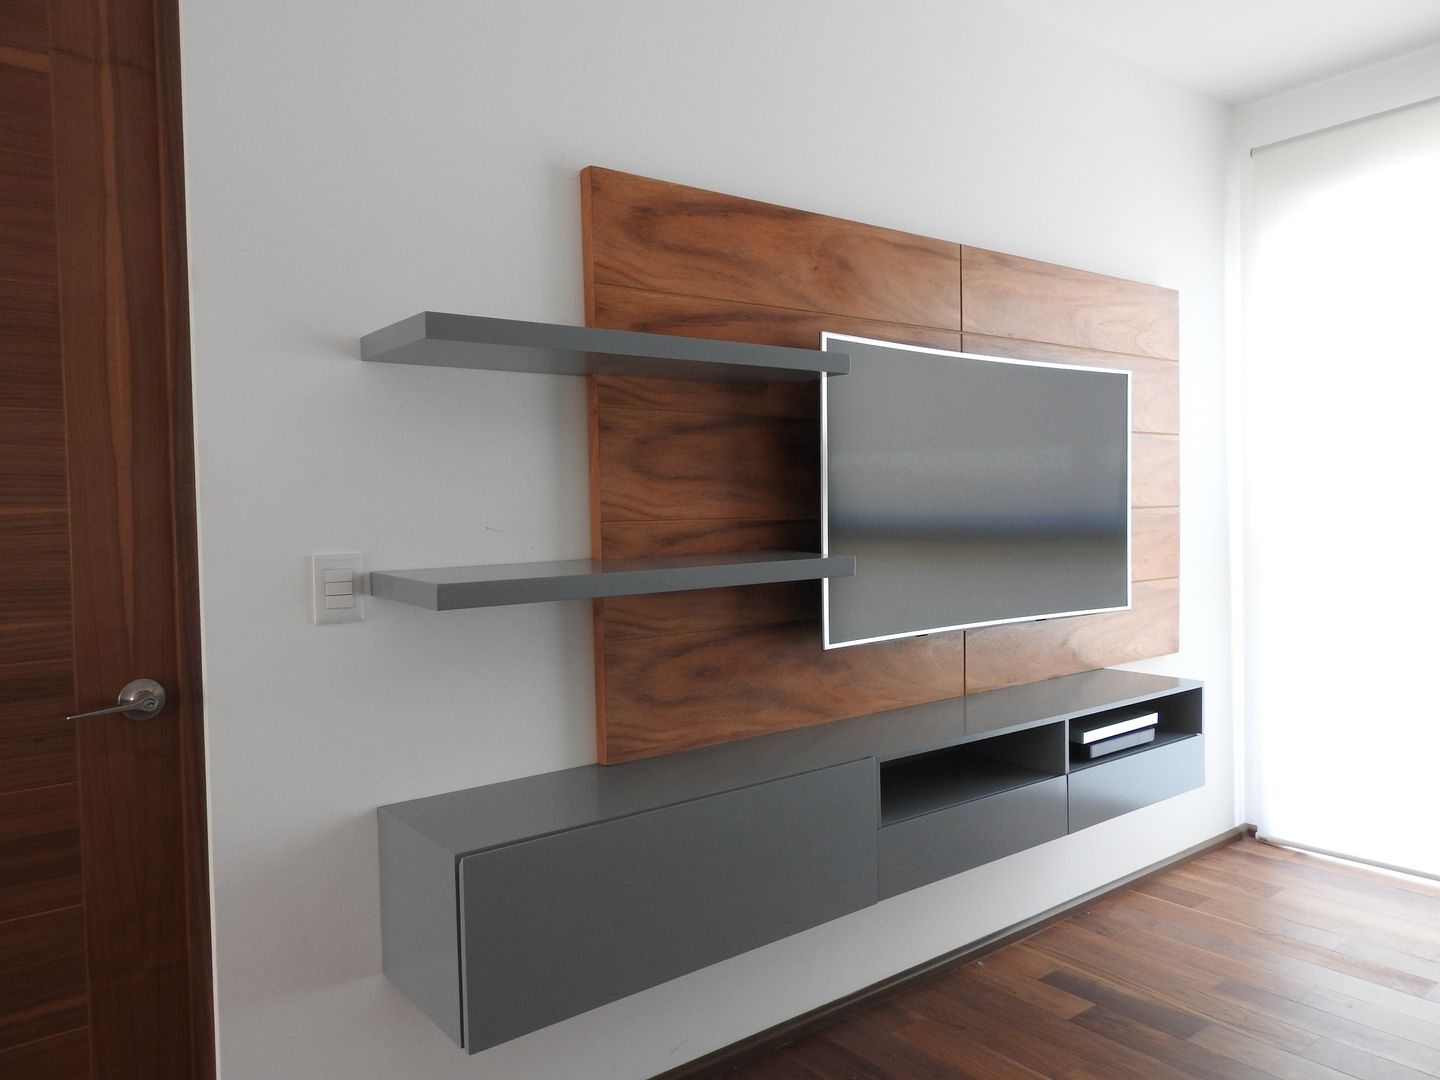 Departamento Bajamares, TALLER TAMI TALLER TAMI Modern living room Wood Wood effect TV stands & cabinets